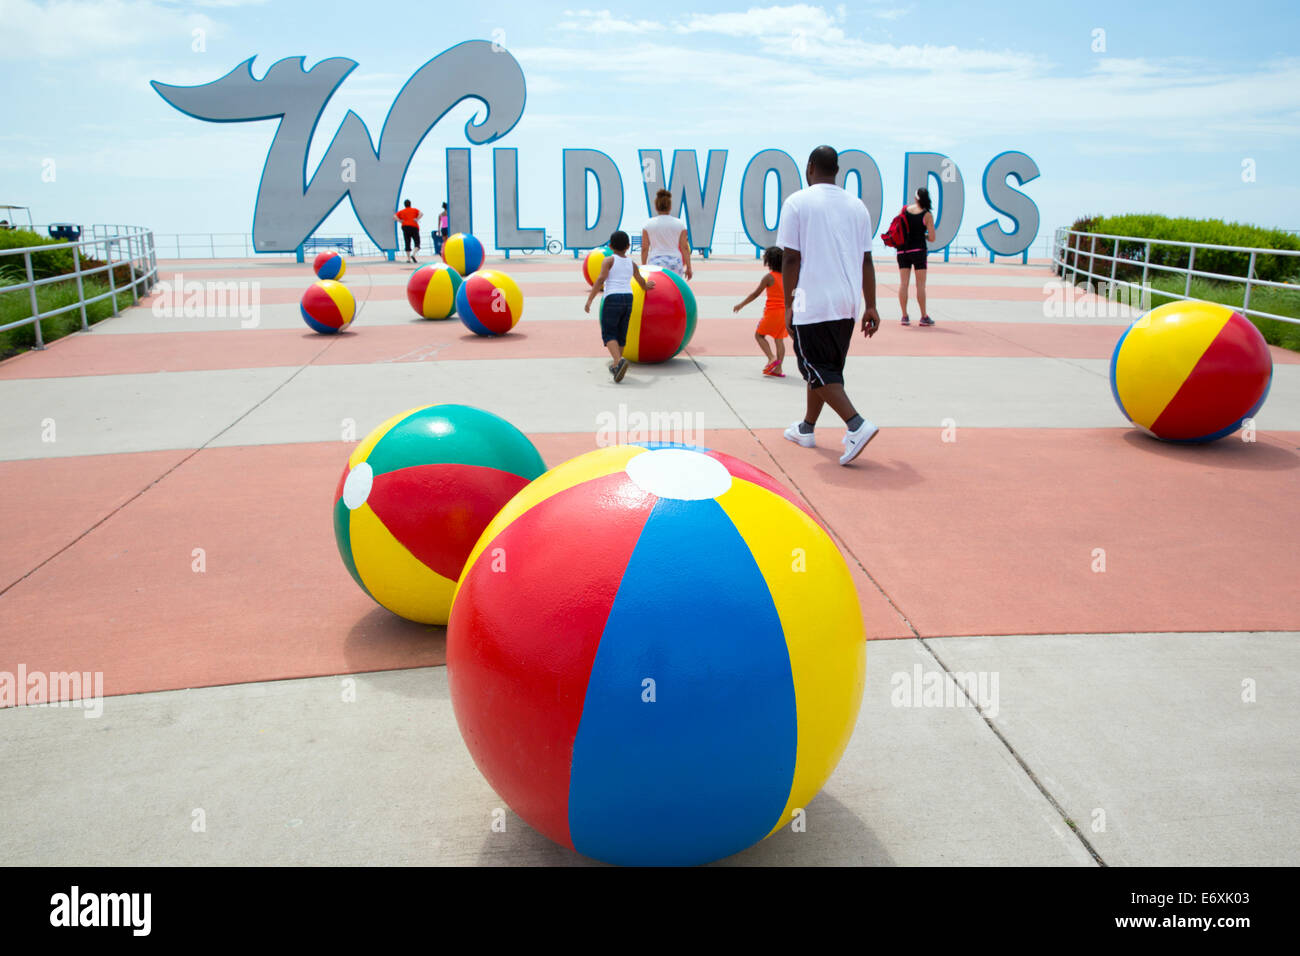 USA,New Jersey,Wildwood Wildwood,signer et ballons de plage Banque D'Images